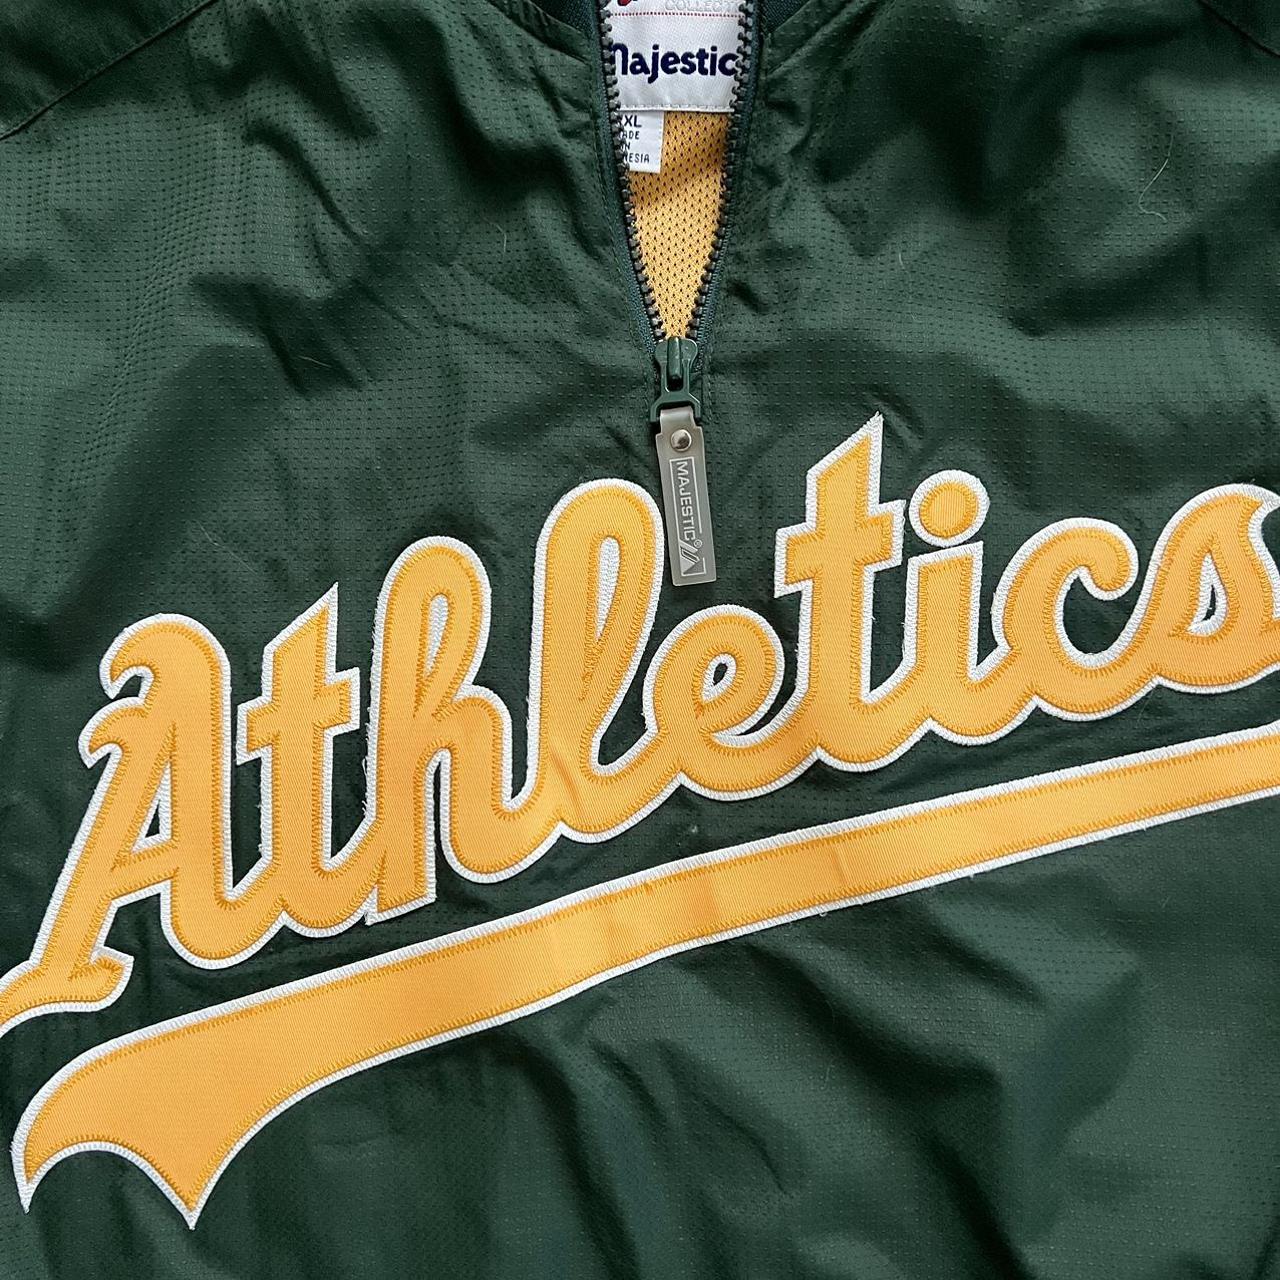 Men's Majestic Gold Oakland Athletics Fast-Paced T-Shirt Size: Medium